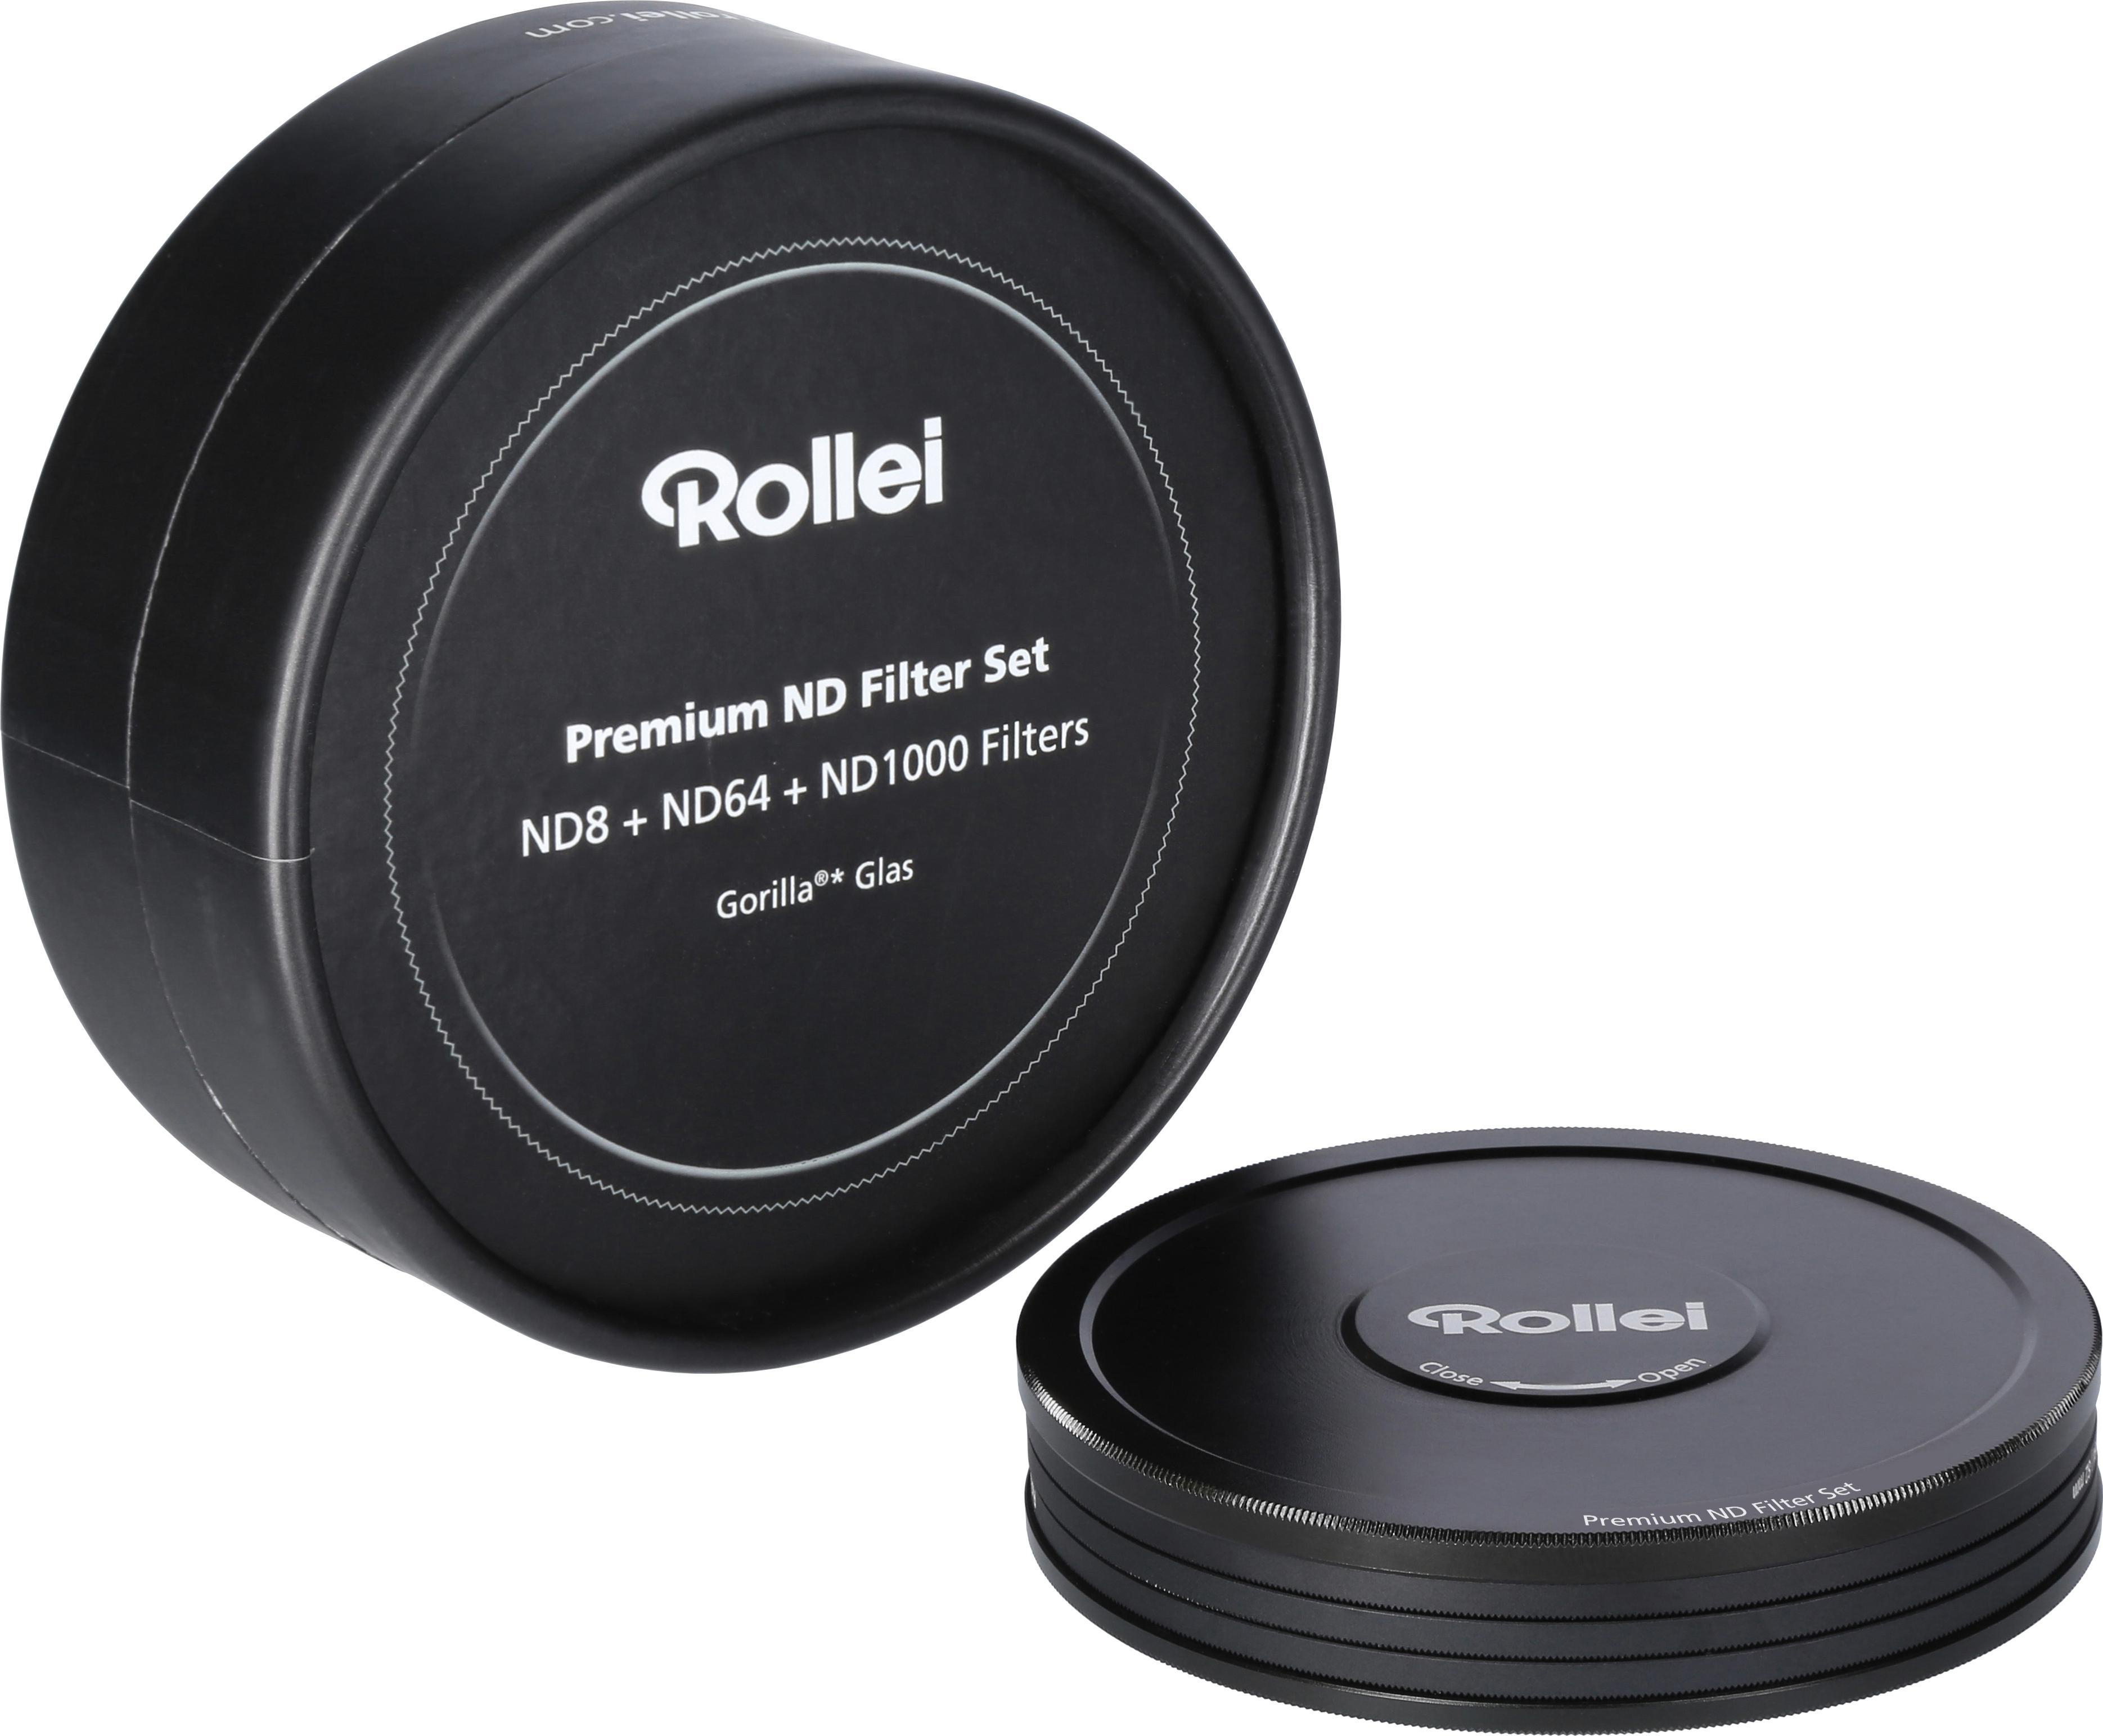 ROLLEI Premium ND 77 mm Filter Set